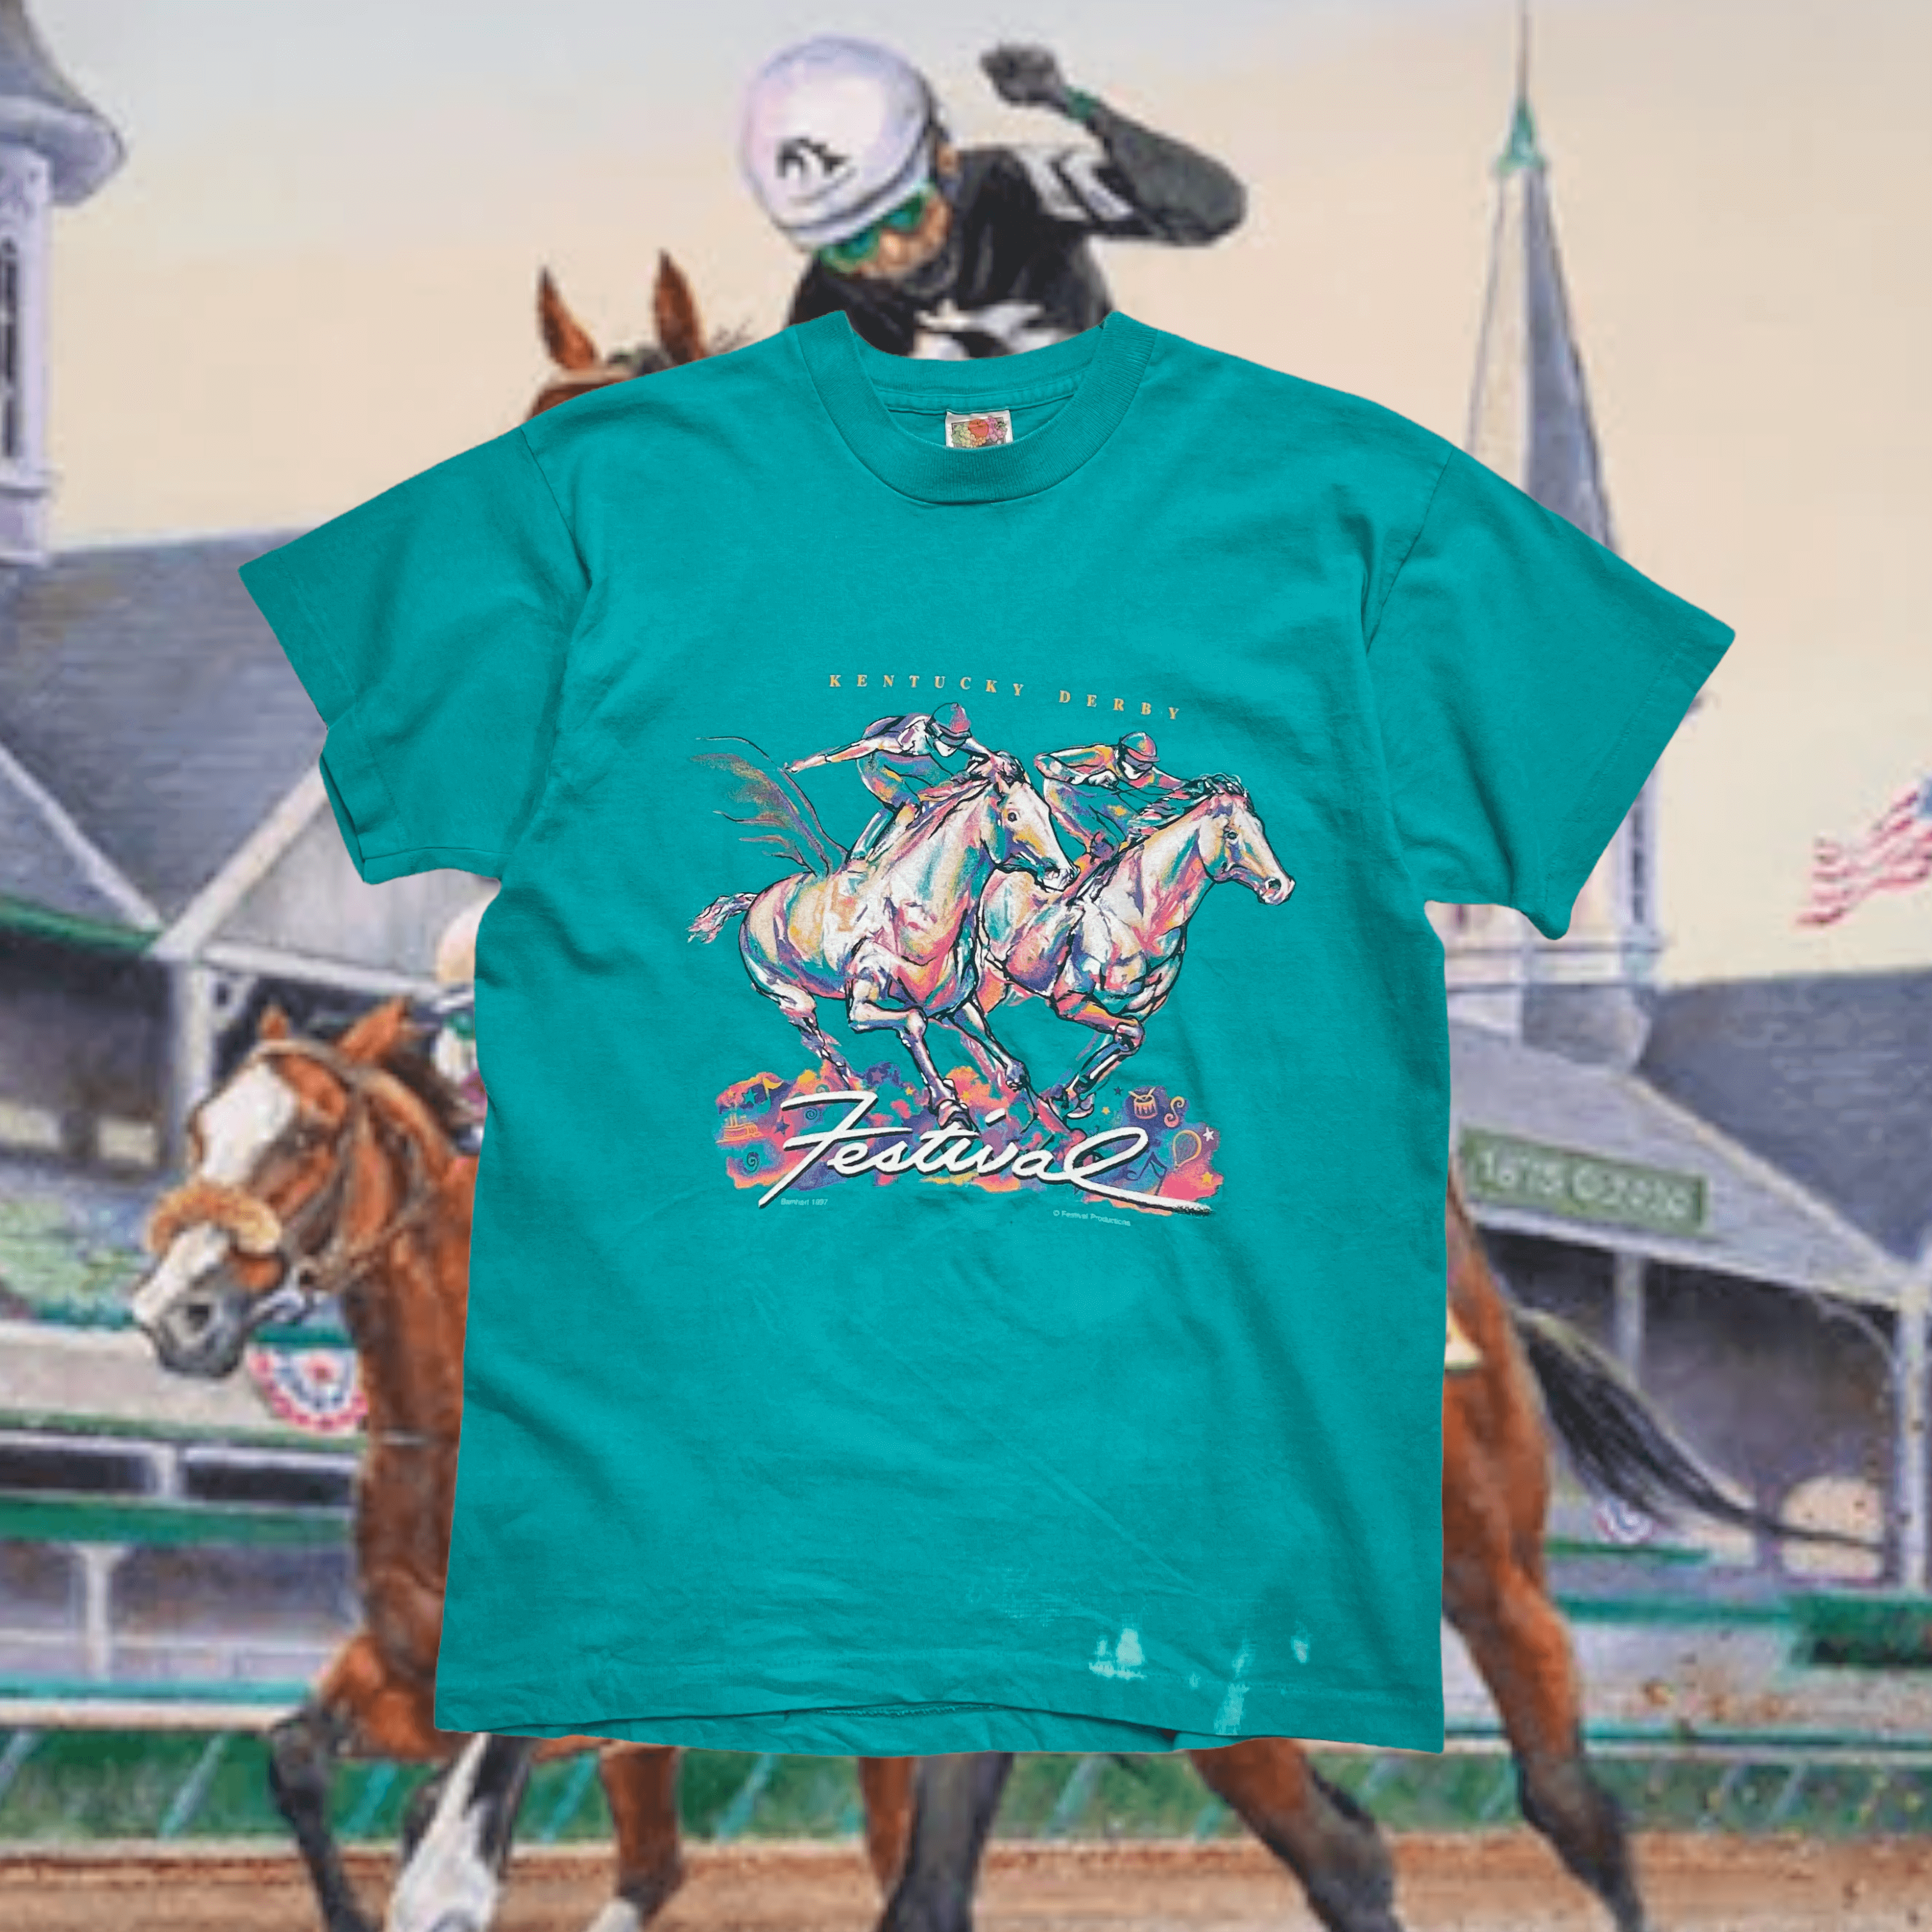 1997 Kentucky Durby Festival T-Shirts